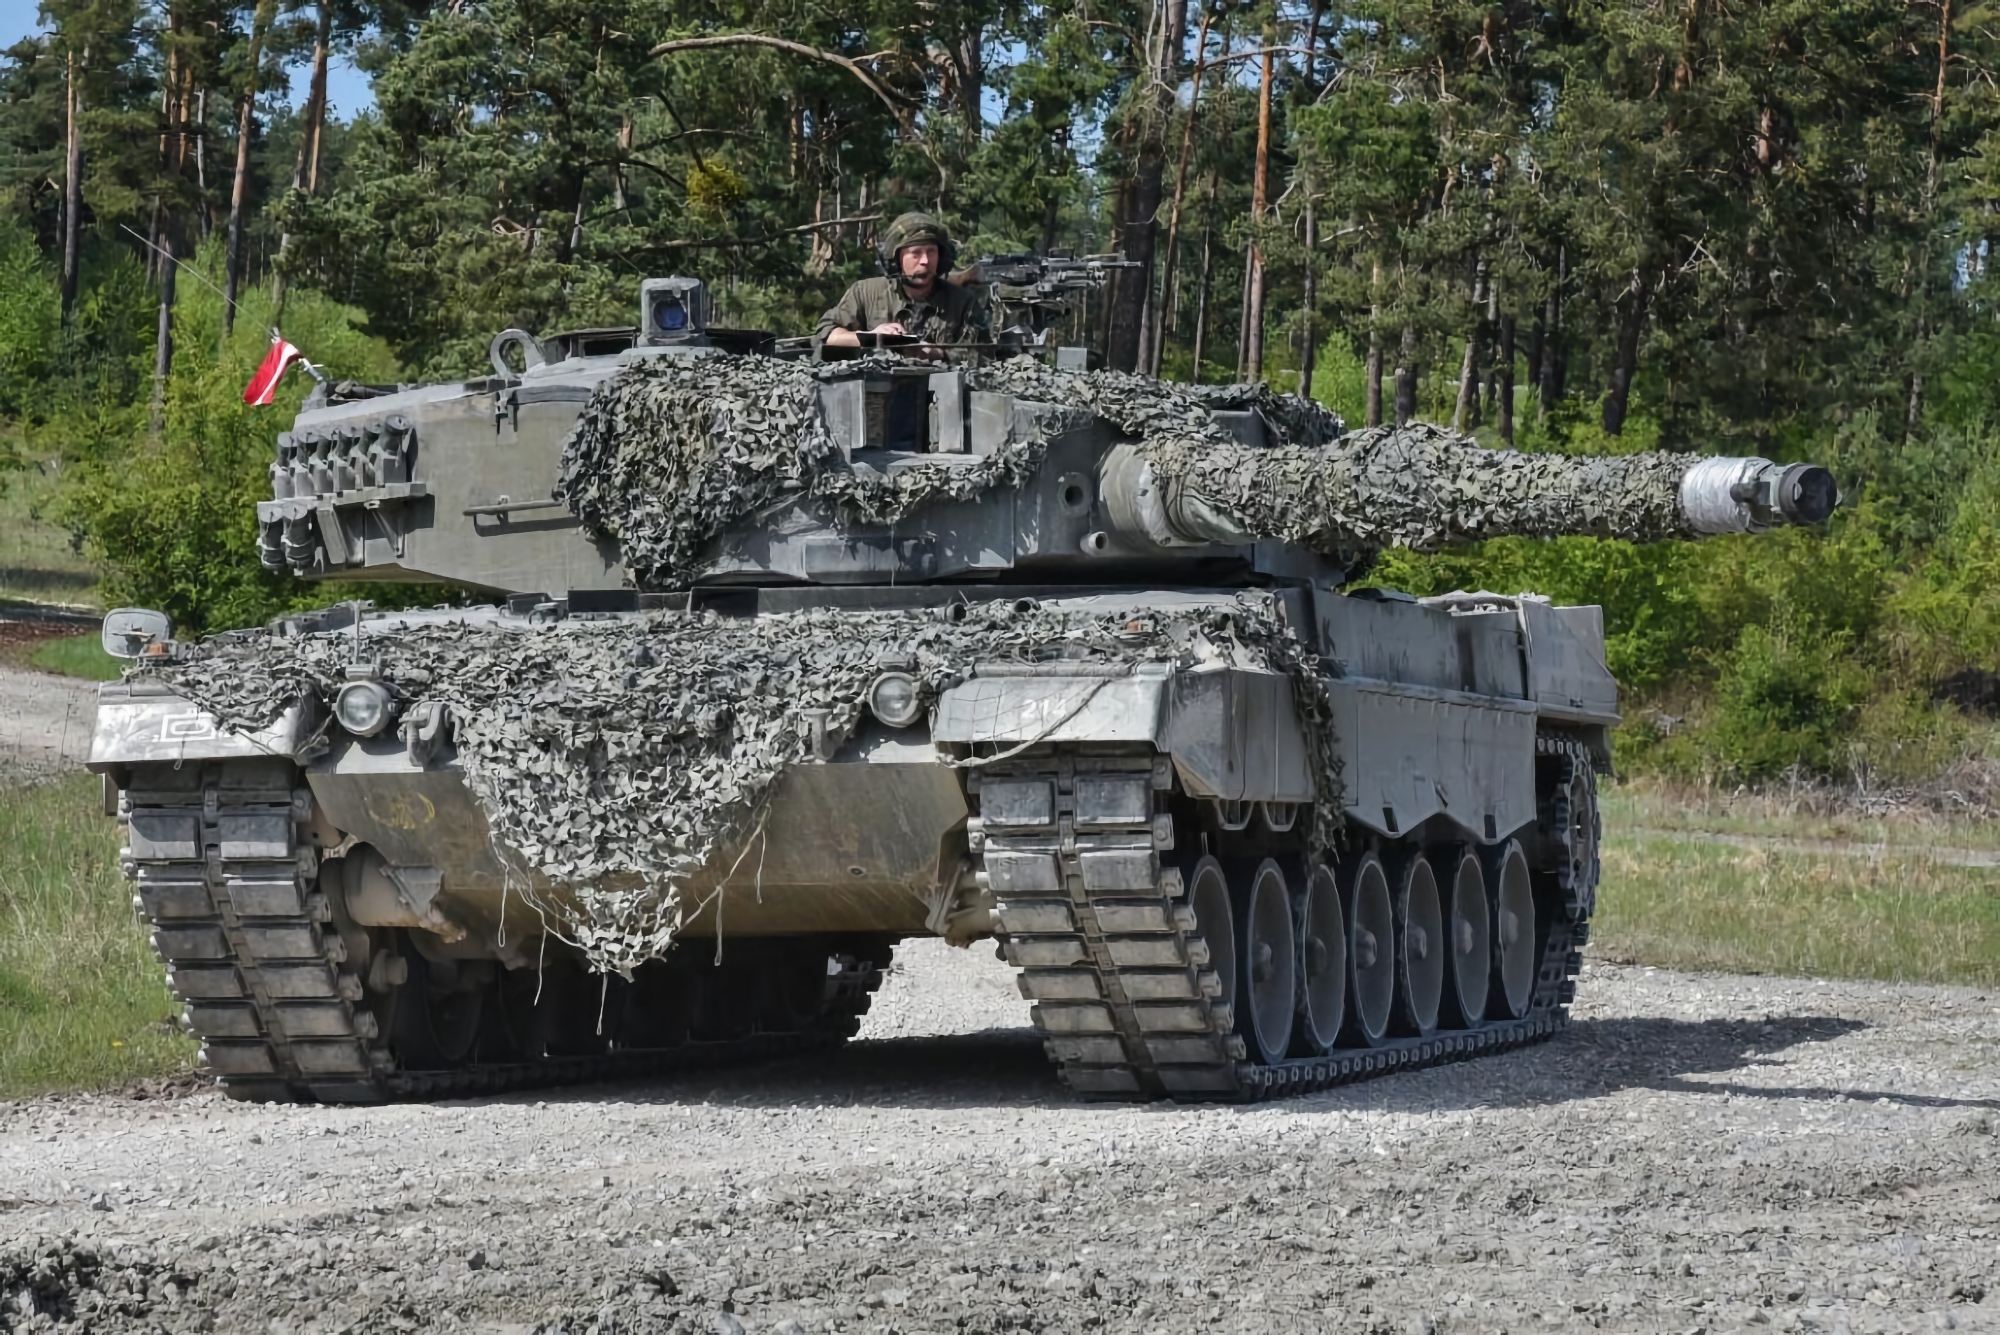 Oficial: España transferirá 6 carros Leopard 2 a Ucrania